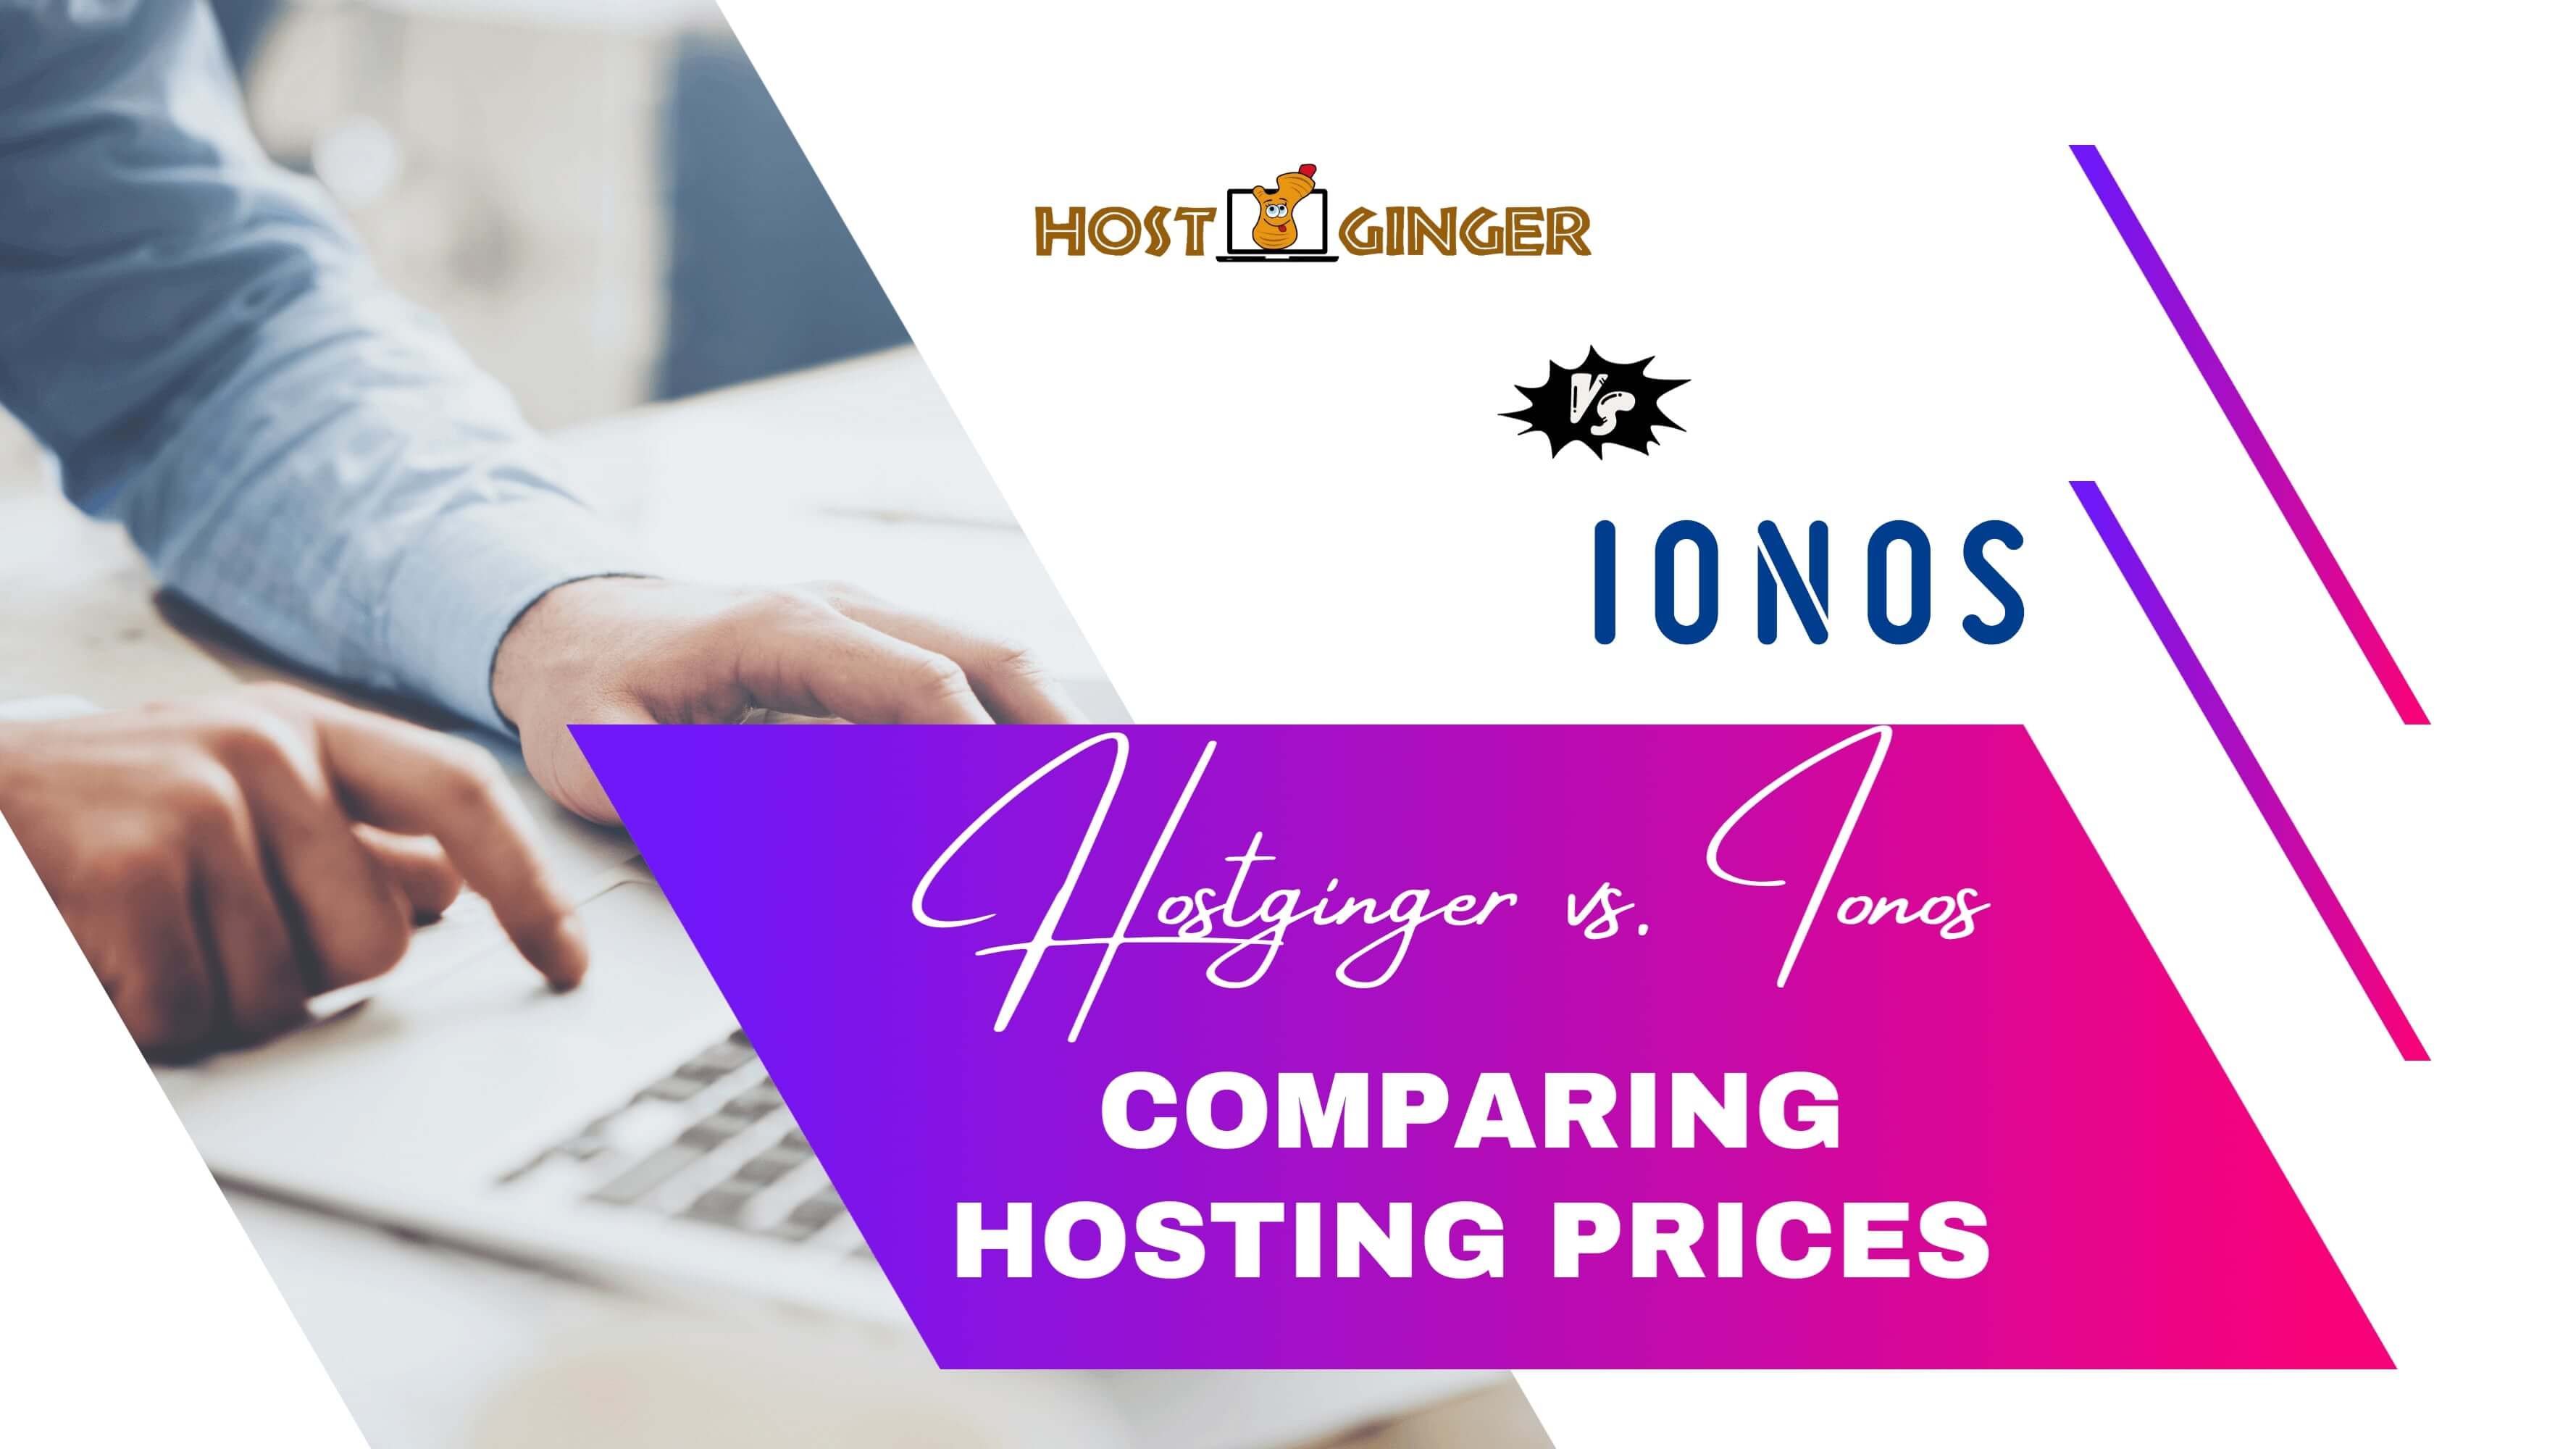 Comparing Prices Hosting : Hostginger vs Ionos